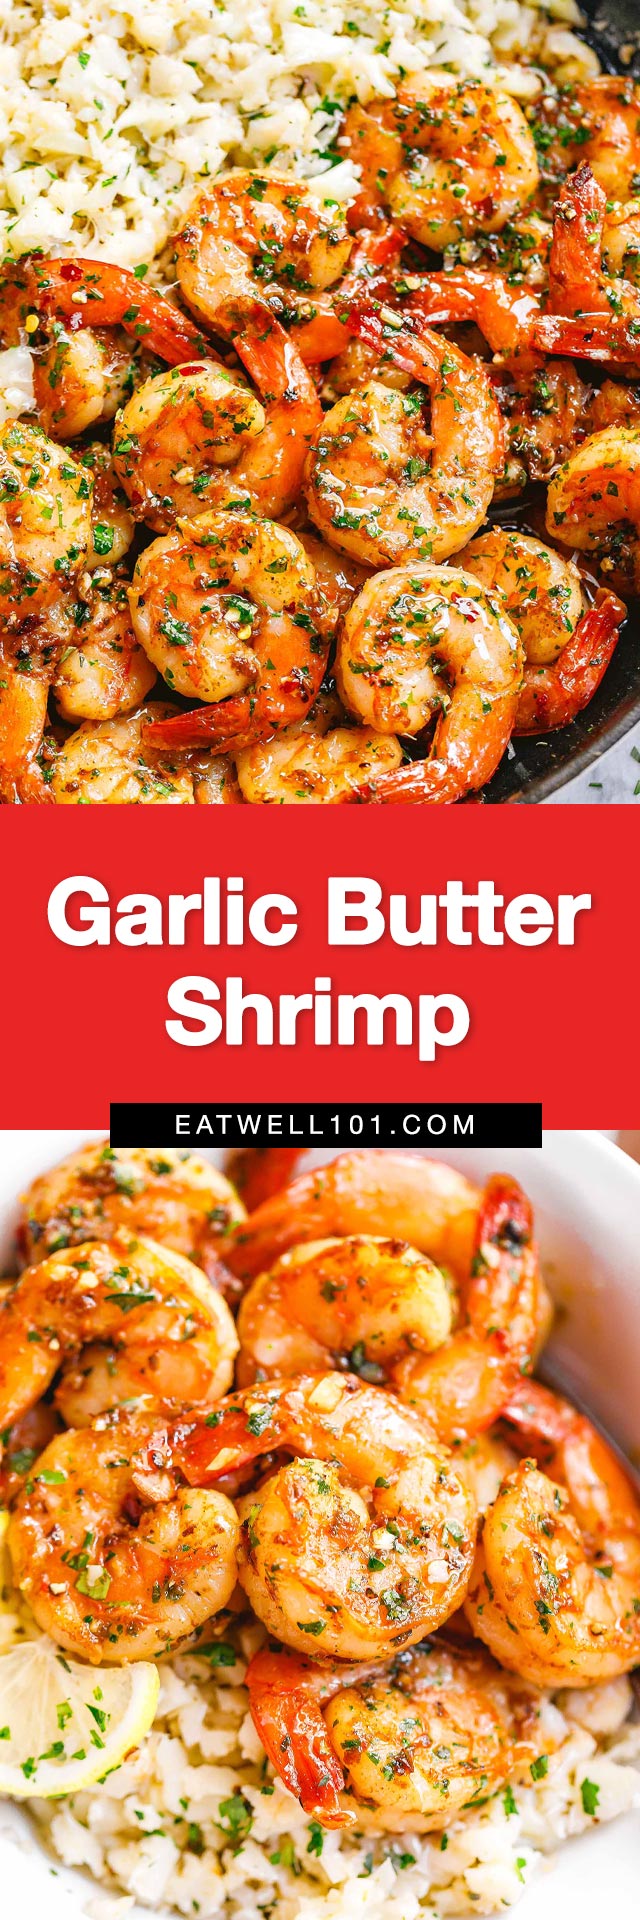 Garlic Butter Shrimp with Lemon Parmesan Cauliflower Rice Recipe - #shrimp #cauliflower #eatwell101 #recipe - Super nourishing and easy to whip up, this shrimp recipe with cauliflower is a winner!